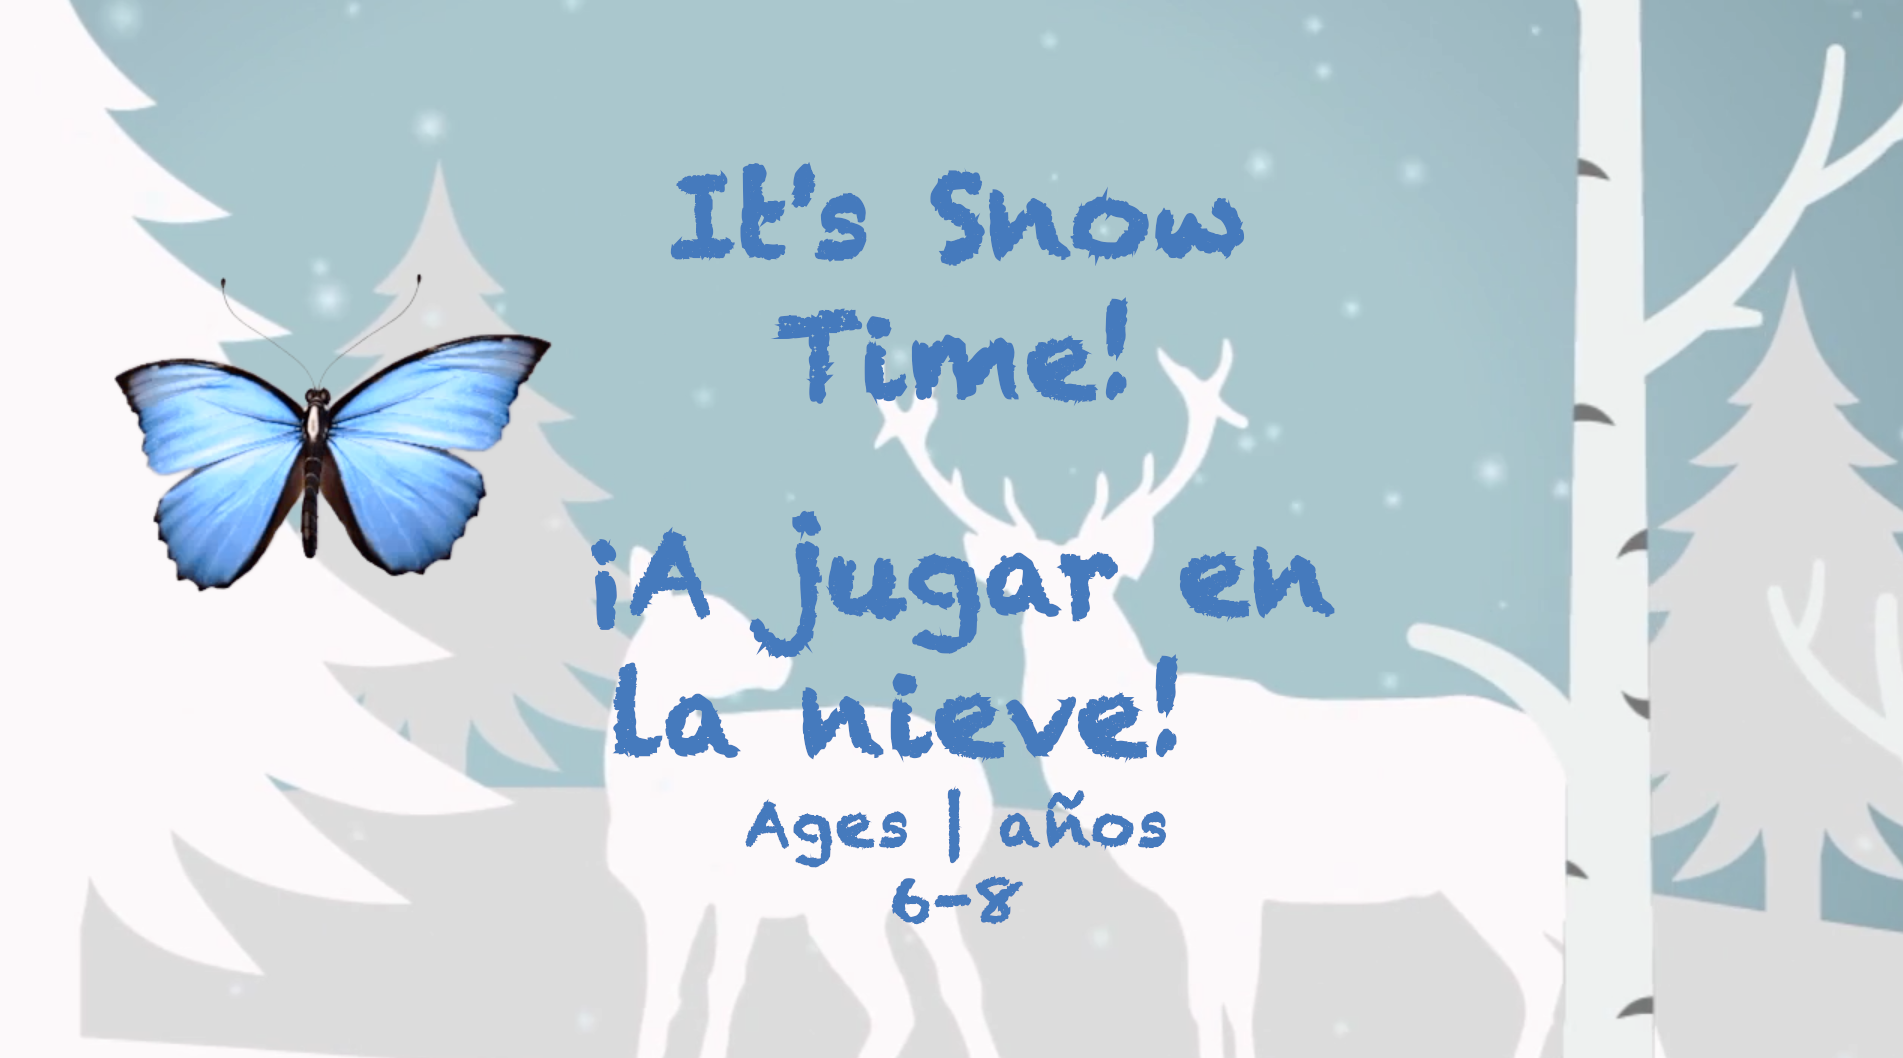 Semana 23 Es la hora de la nieve Tarjeta Edades 6-8